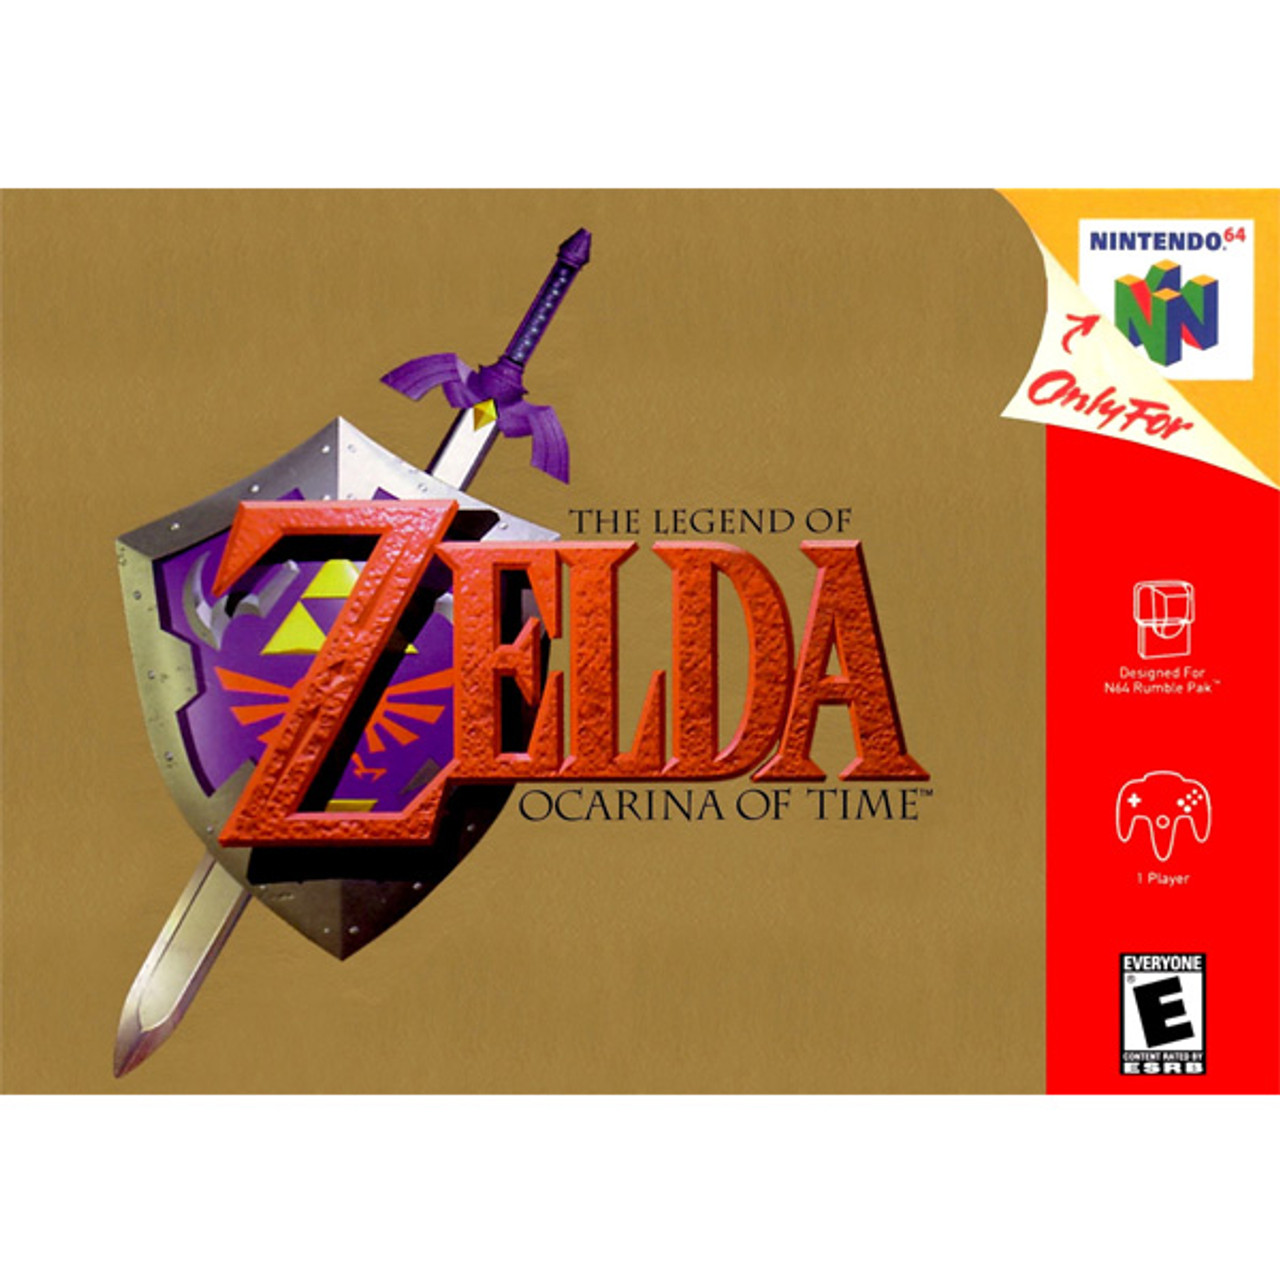 The Legend of Zelda Ocarina of Time - Nintendo 64 